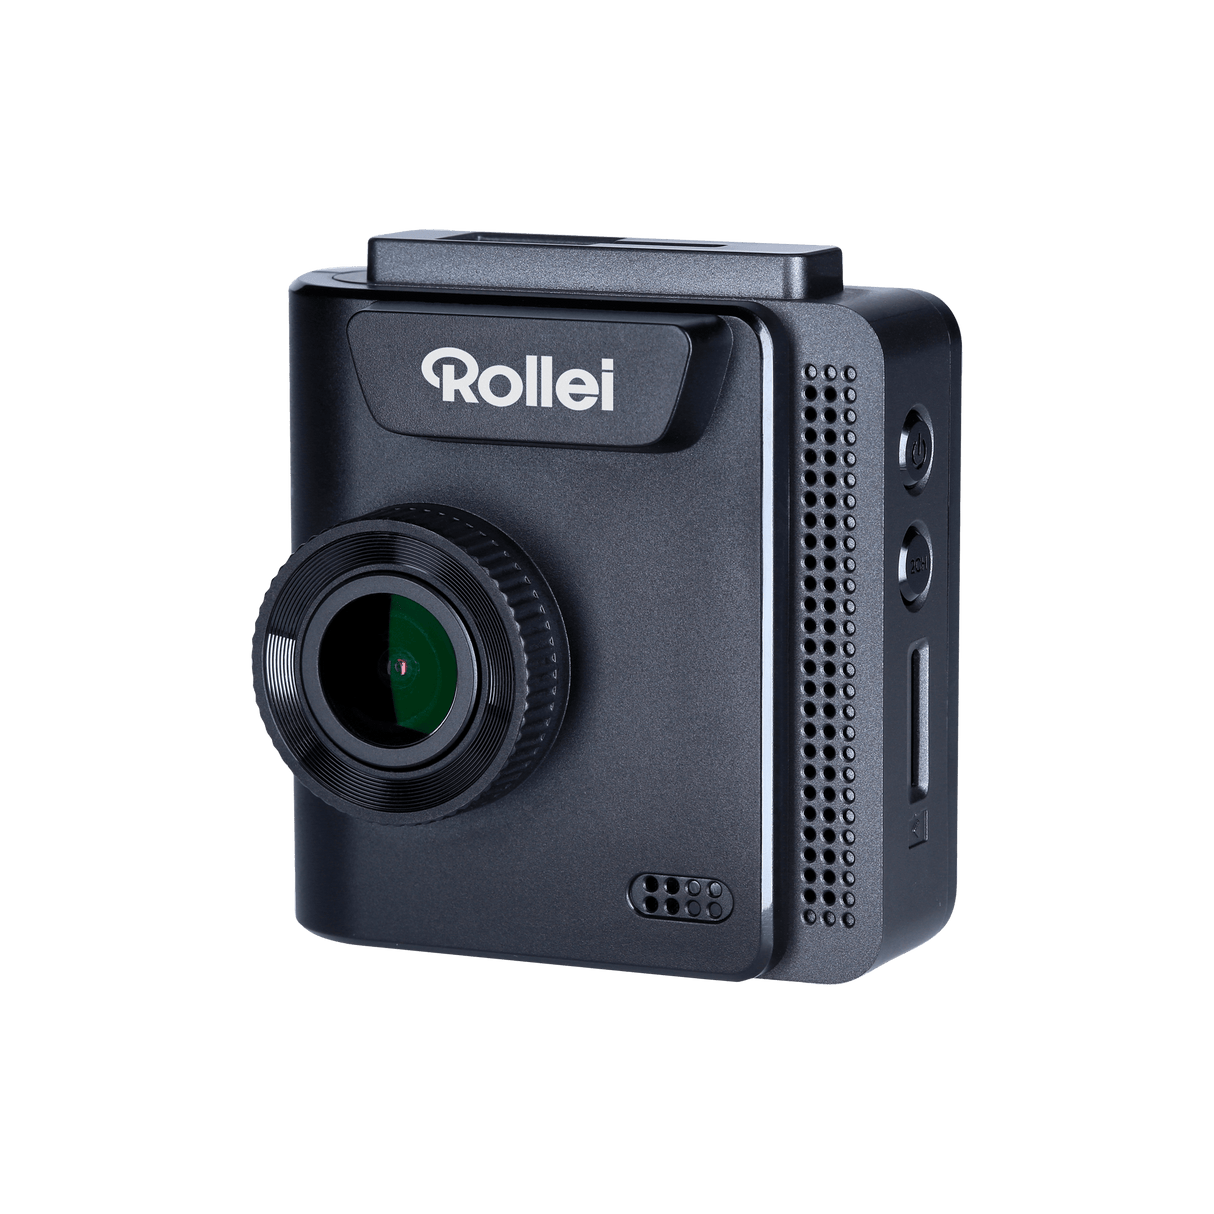 Rollei Actioncams Dashcam 402